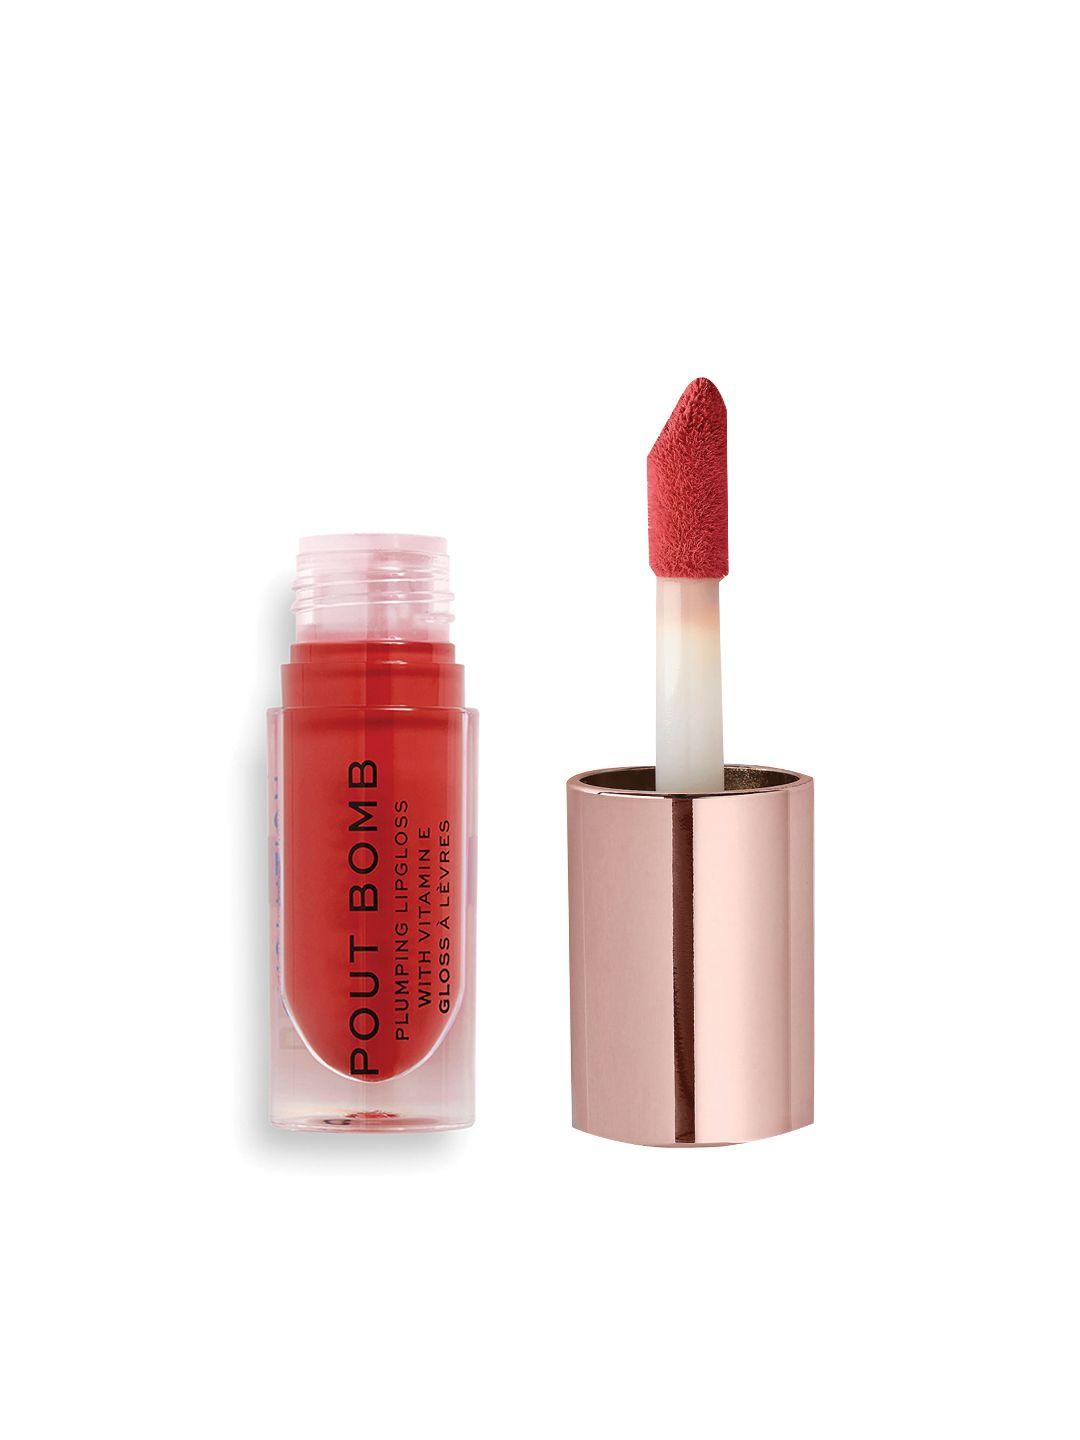 makeup revolution london pout bomb plumping lip gloss with vitamin e 4.6ml - juicy